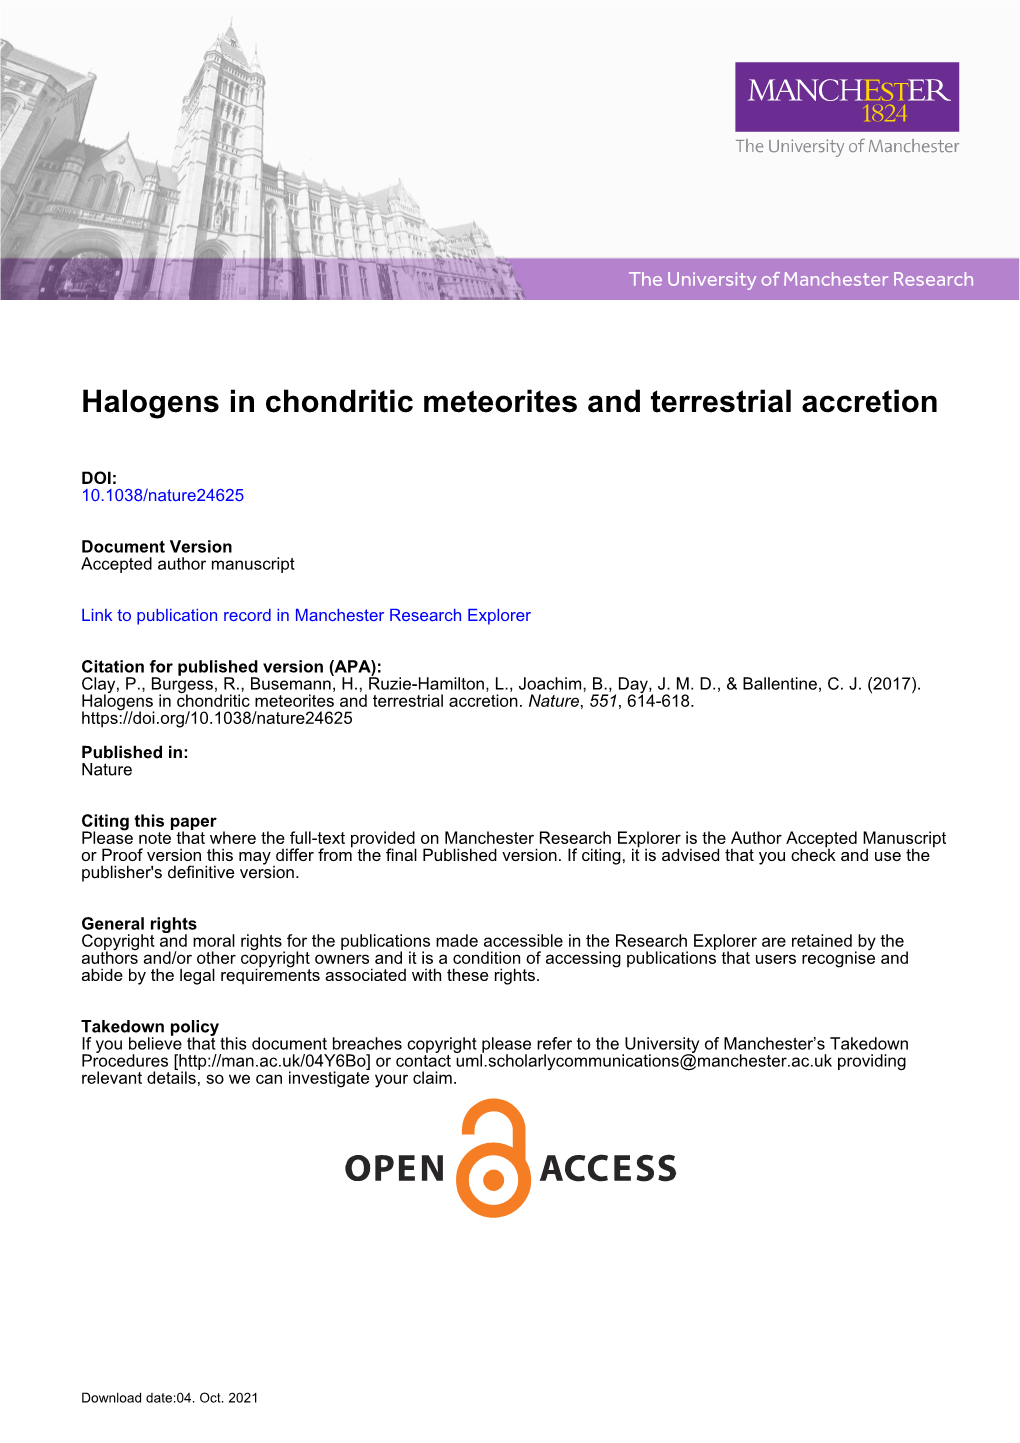 Halogens in Chondritic Meteorites and Terrestrial Accretion